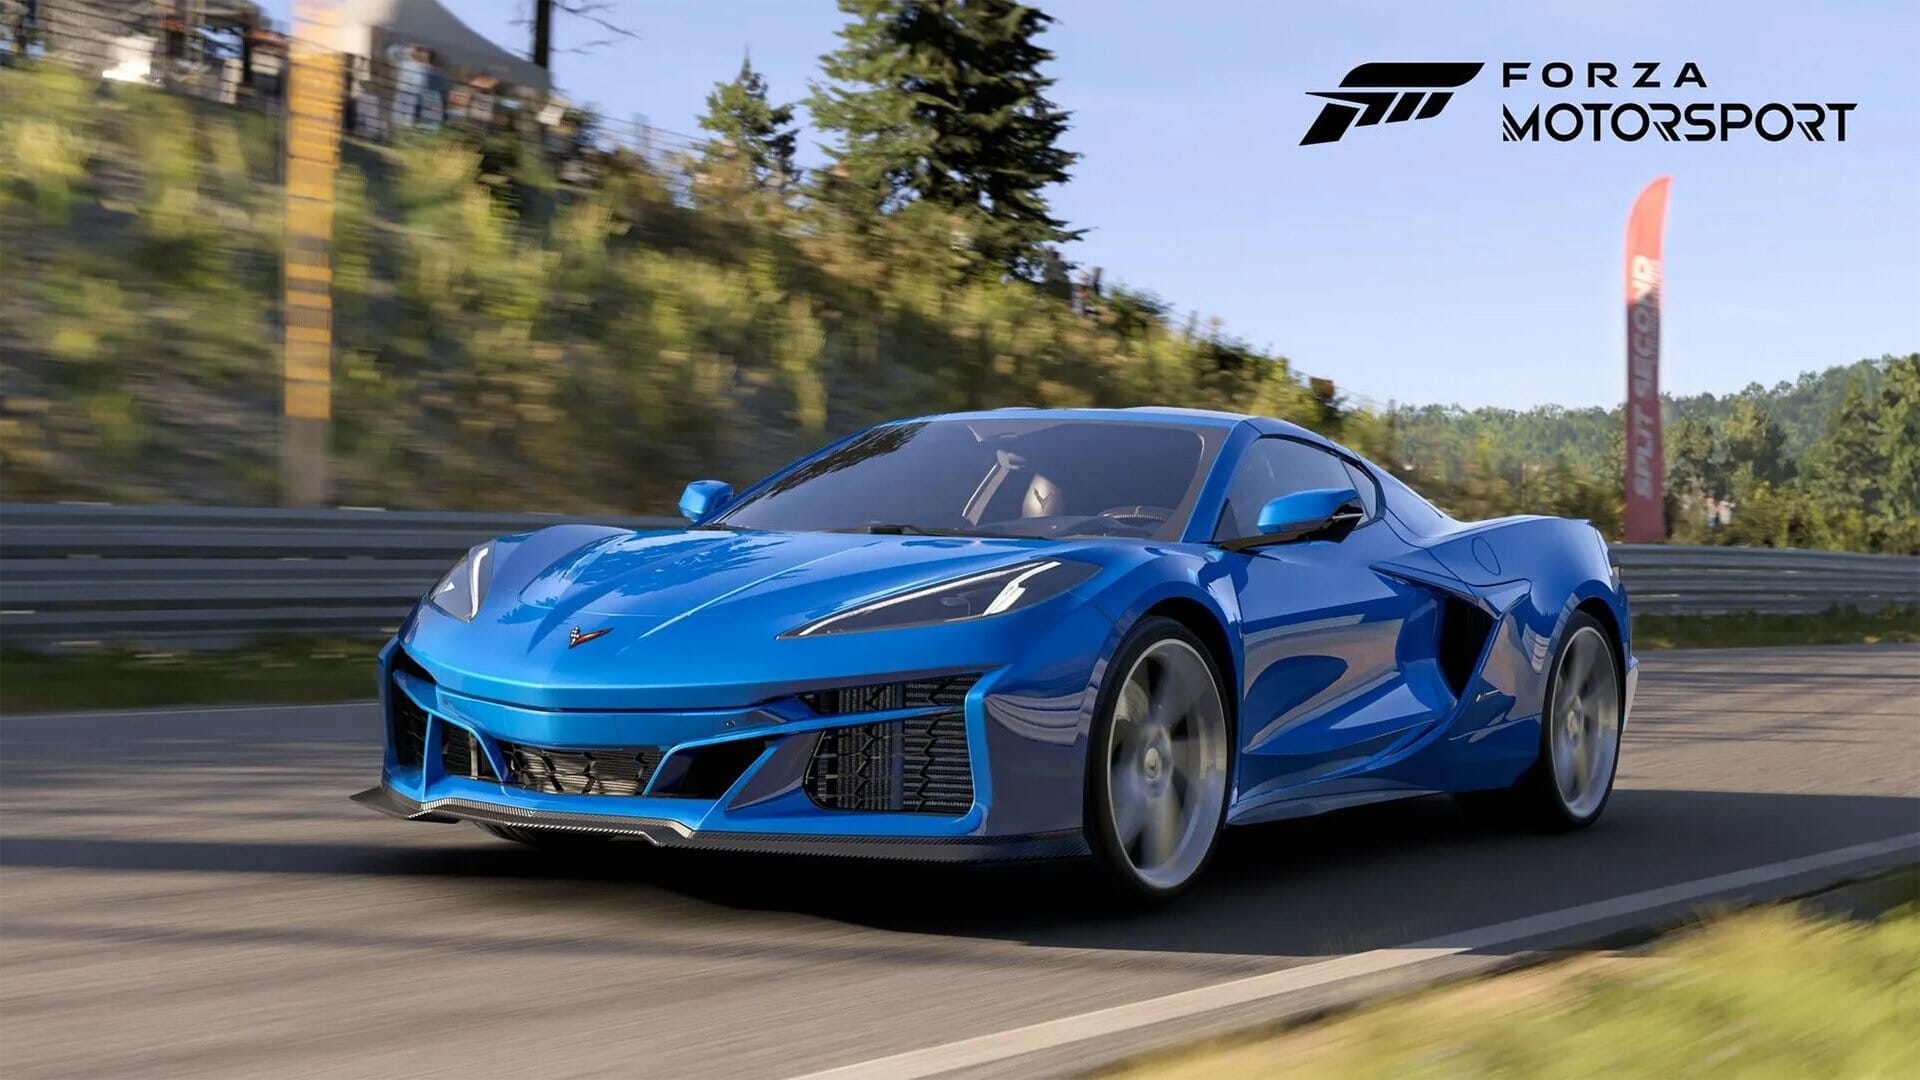 Forza Motorsport's Full Achievement List Revealed